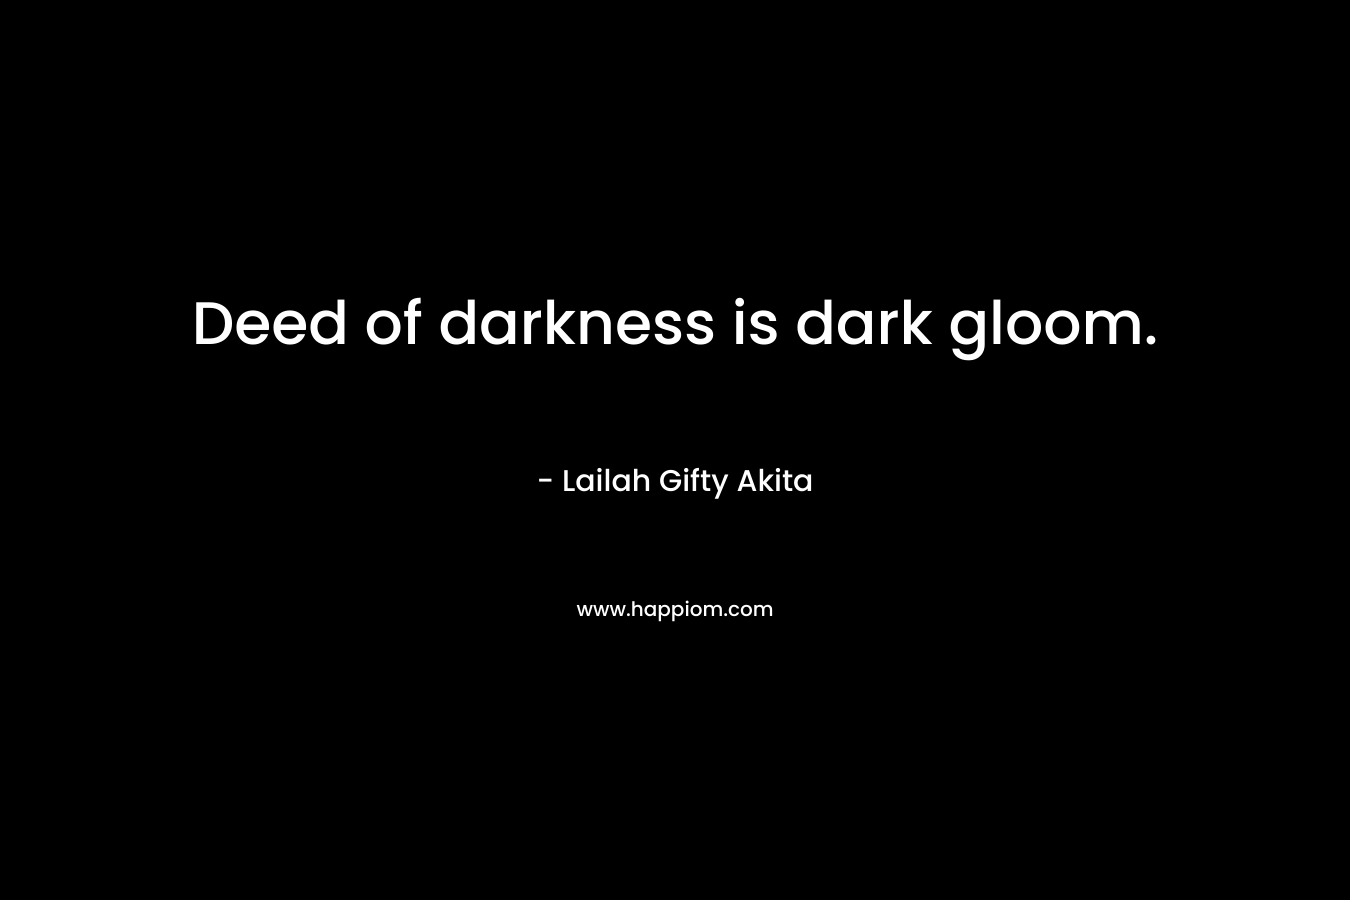 Deed of darkness is dark gloom.